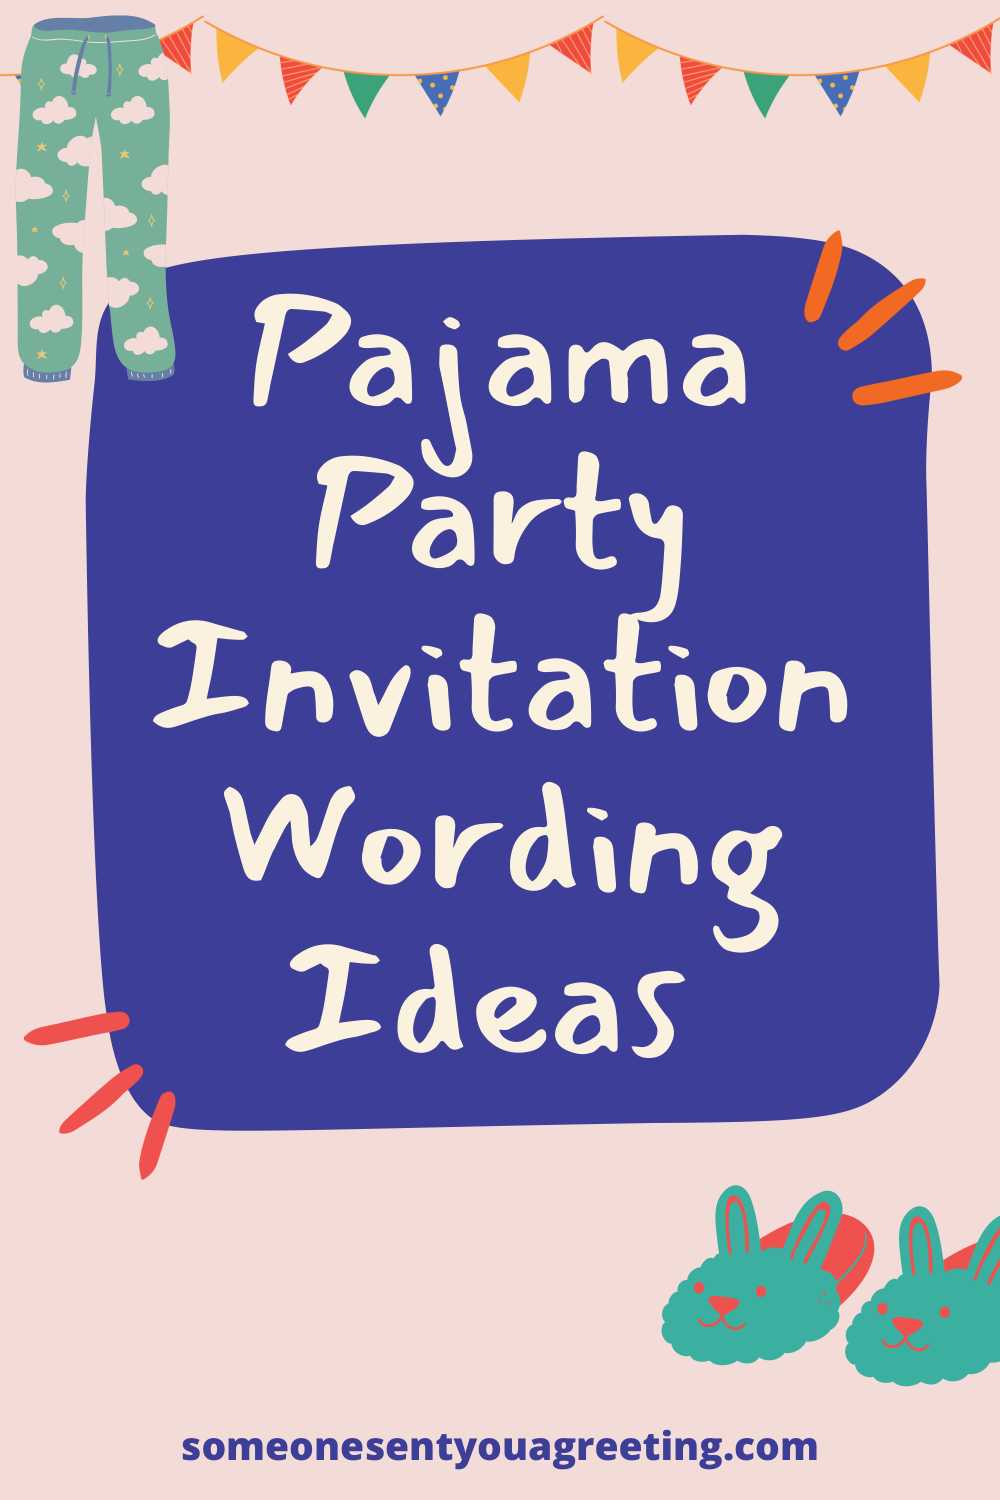 Pajama party invitation wording ideas